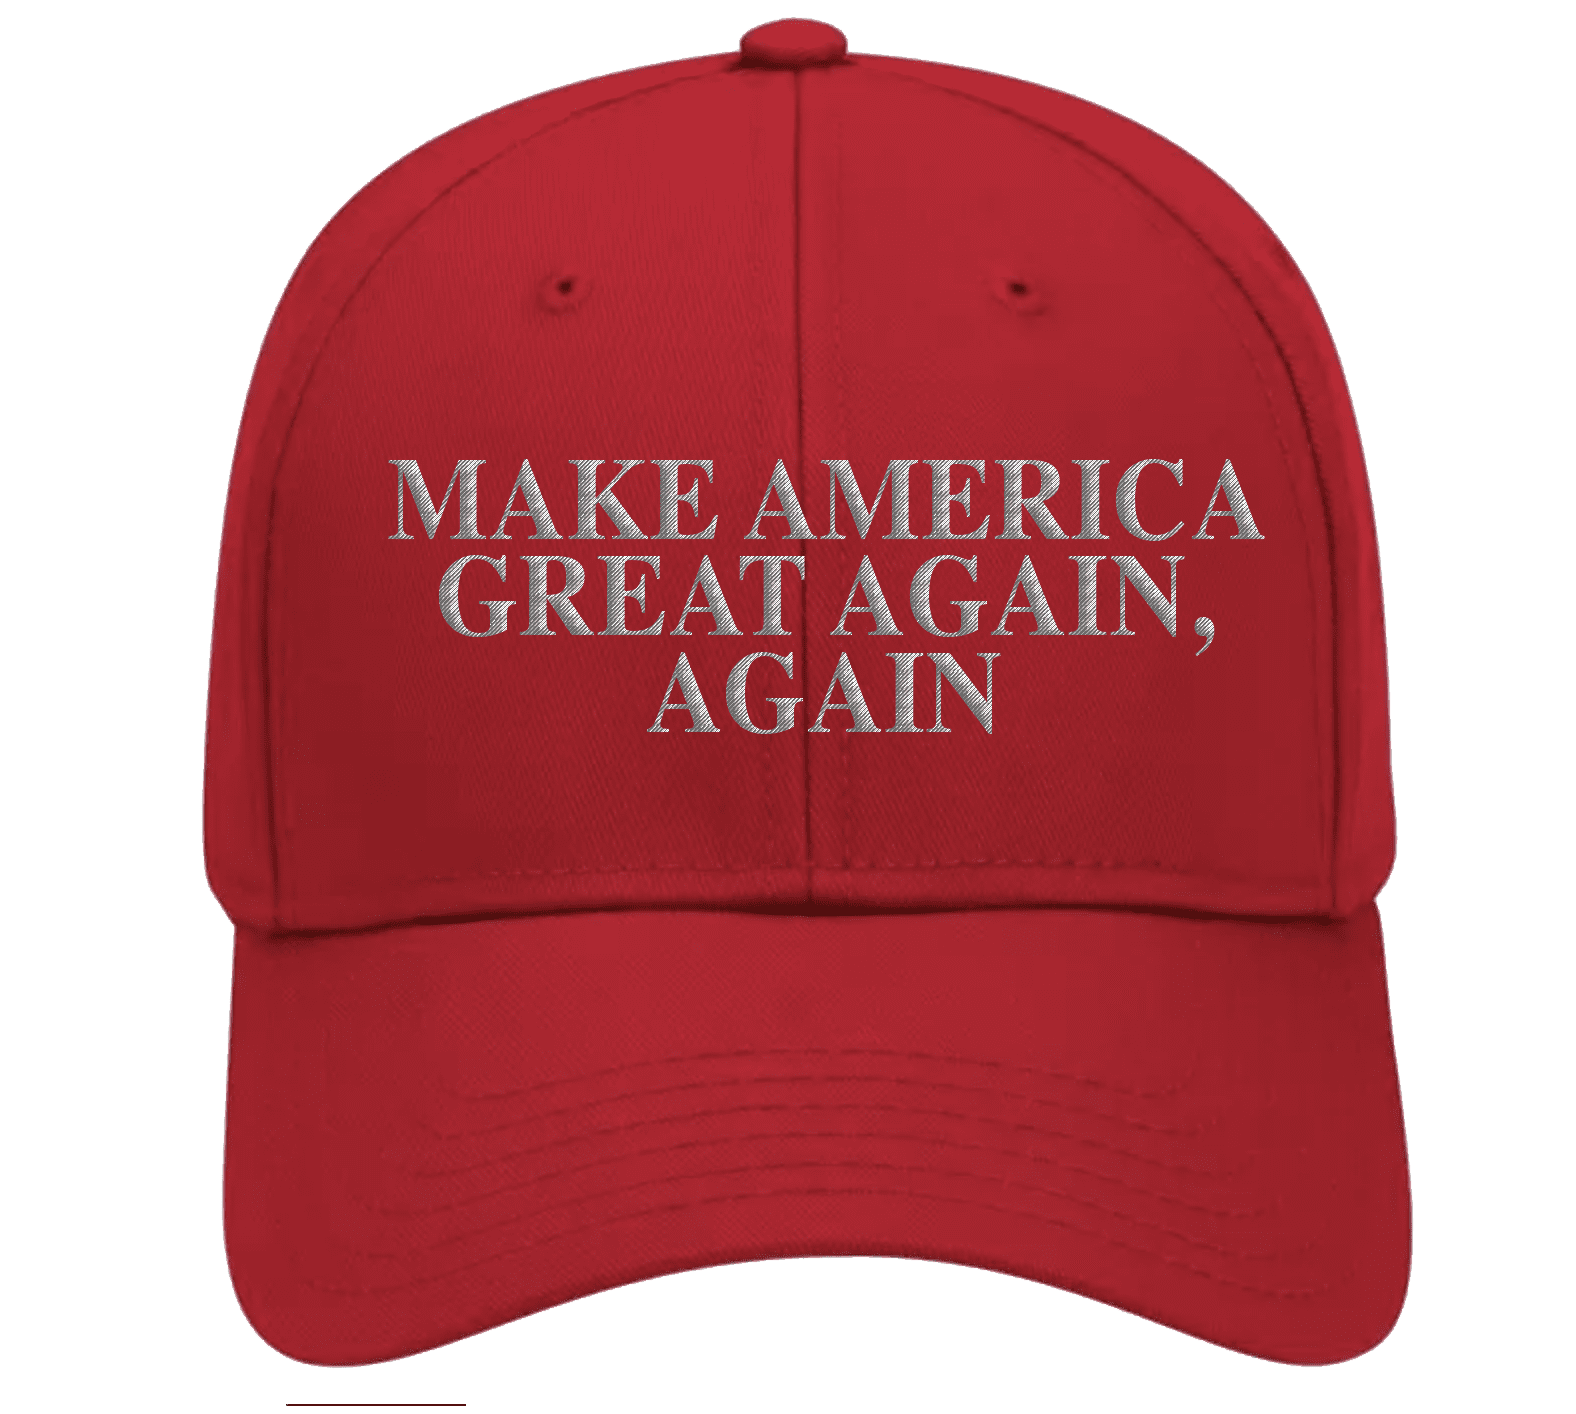 New Baseball Cap w/ Make America Again Embroidery Cotton Adjustable Sun Dad Hat 